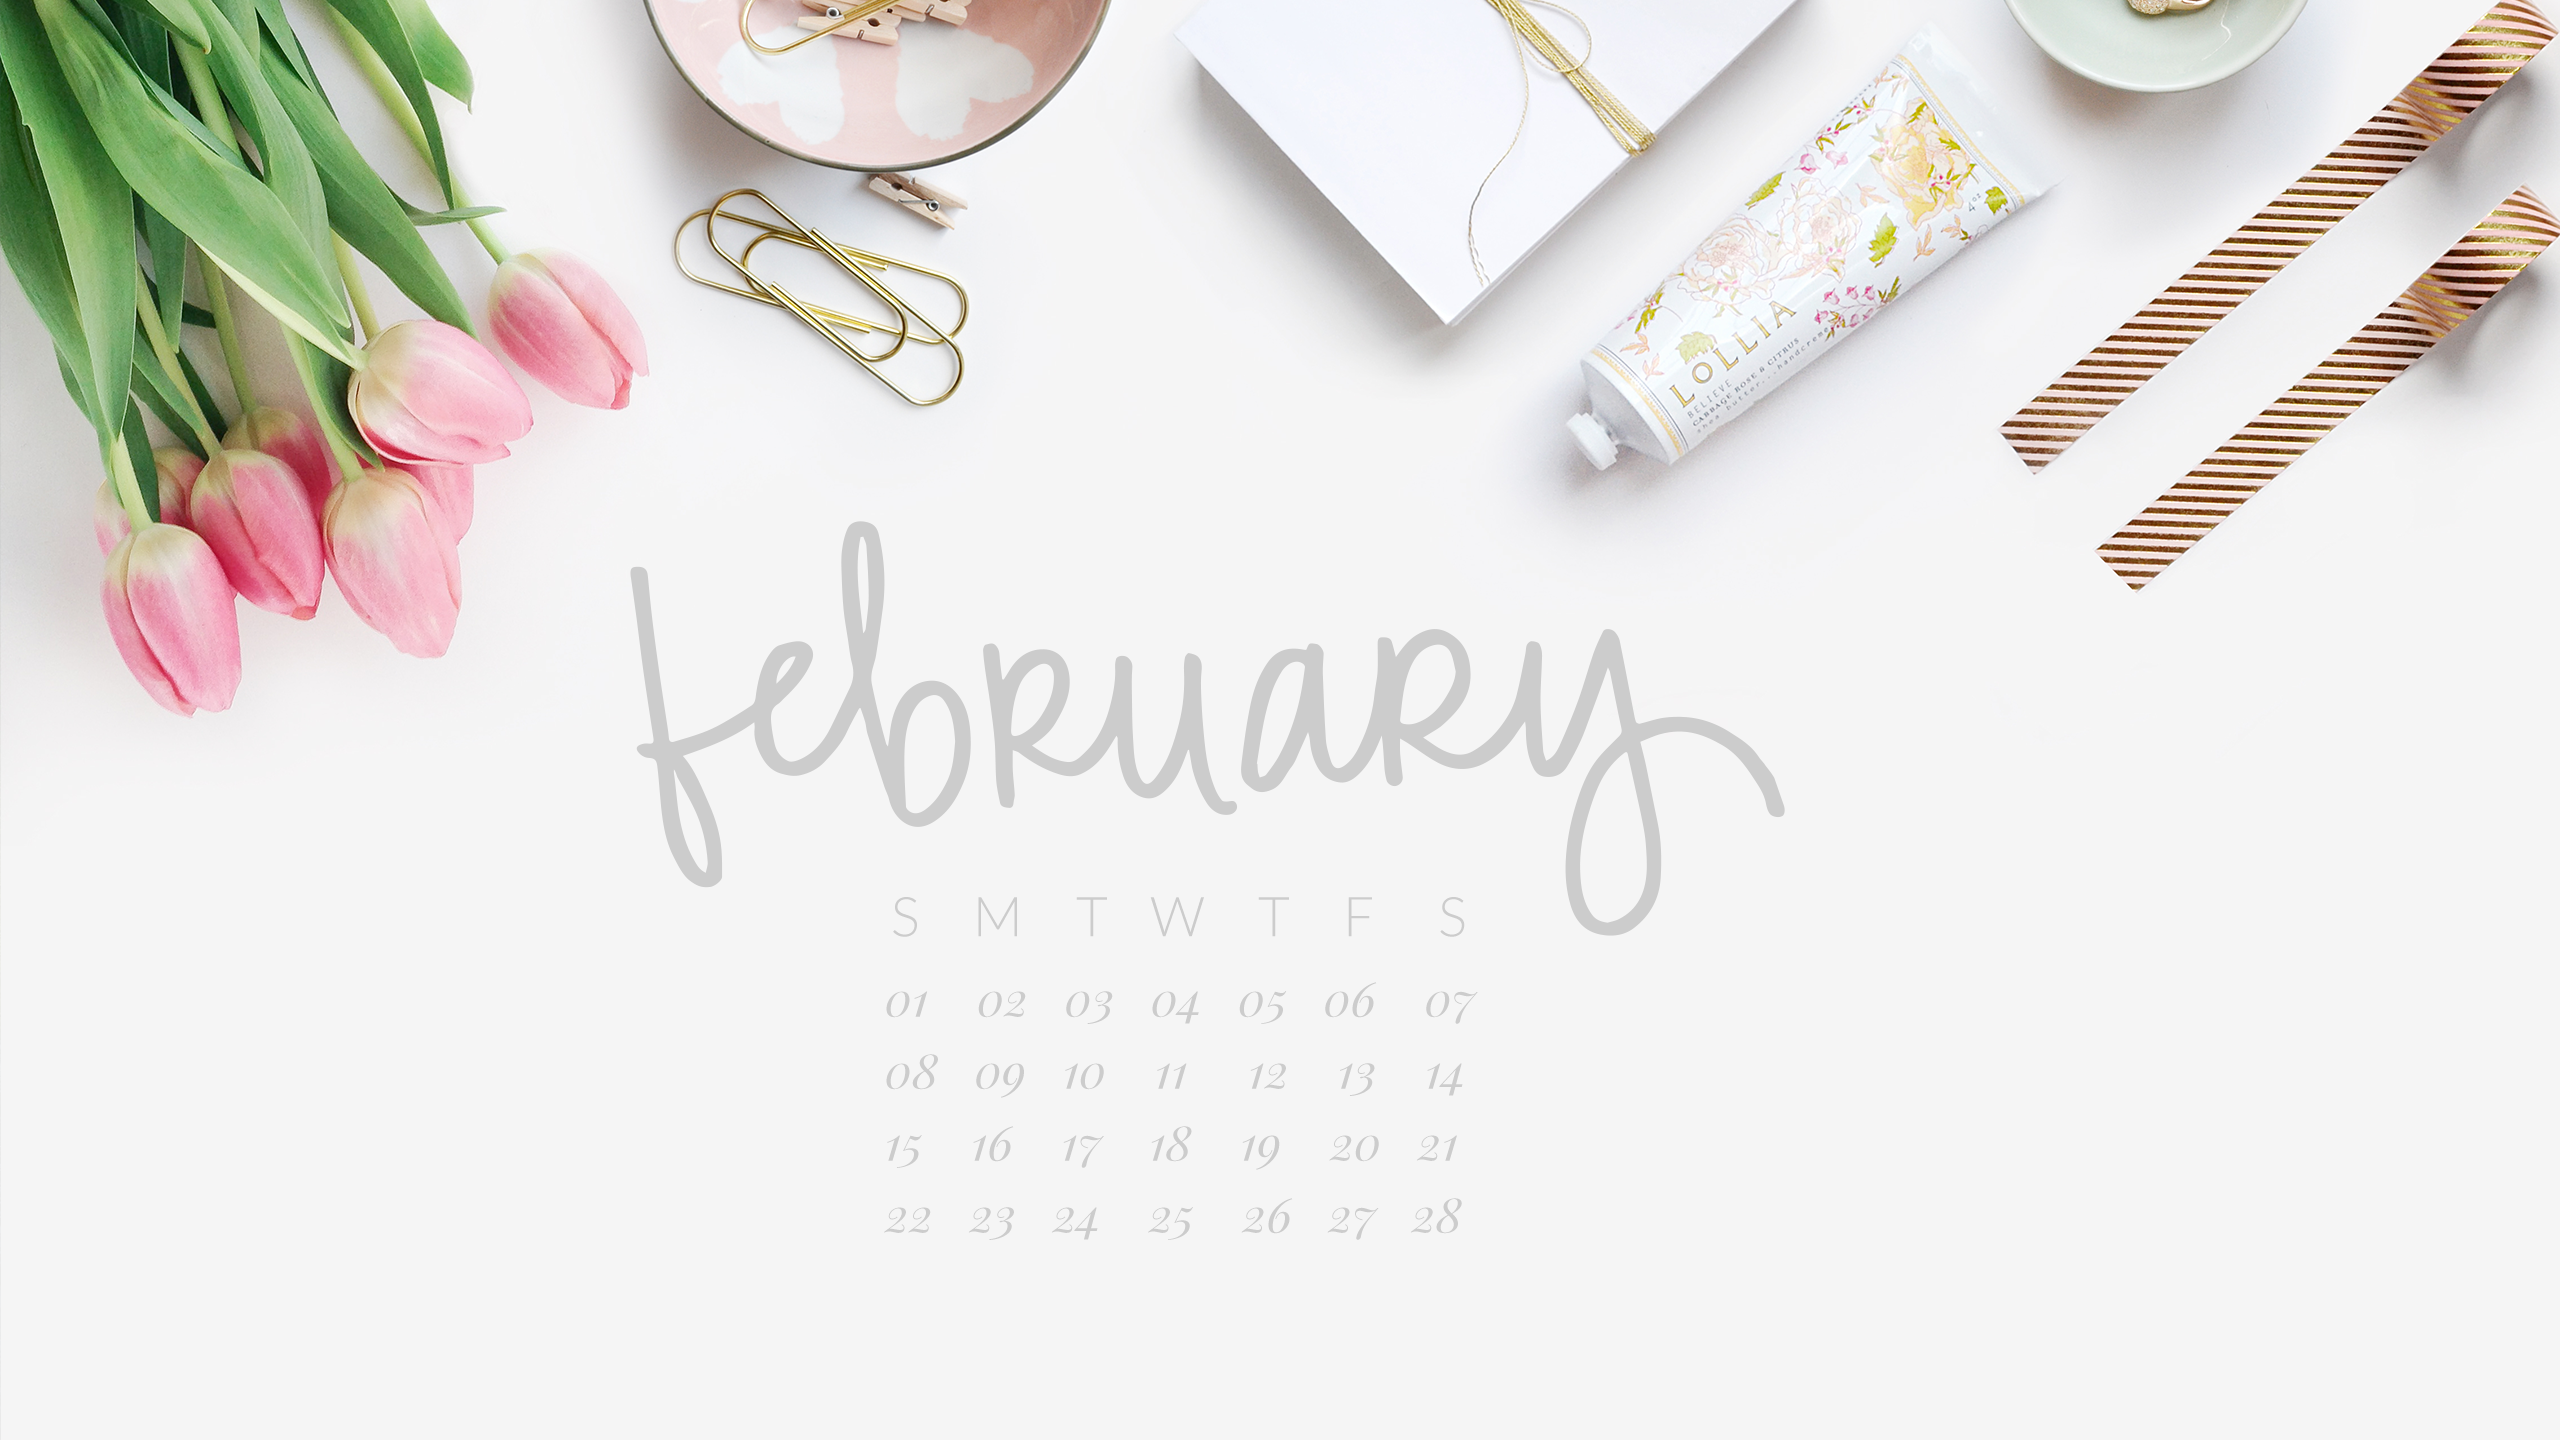 February 2015 Calendar wallpapers - HD Wallpapers Inx